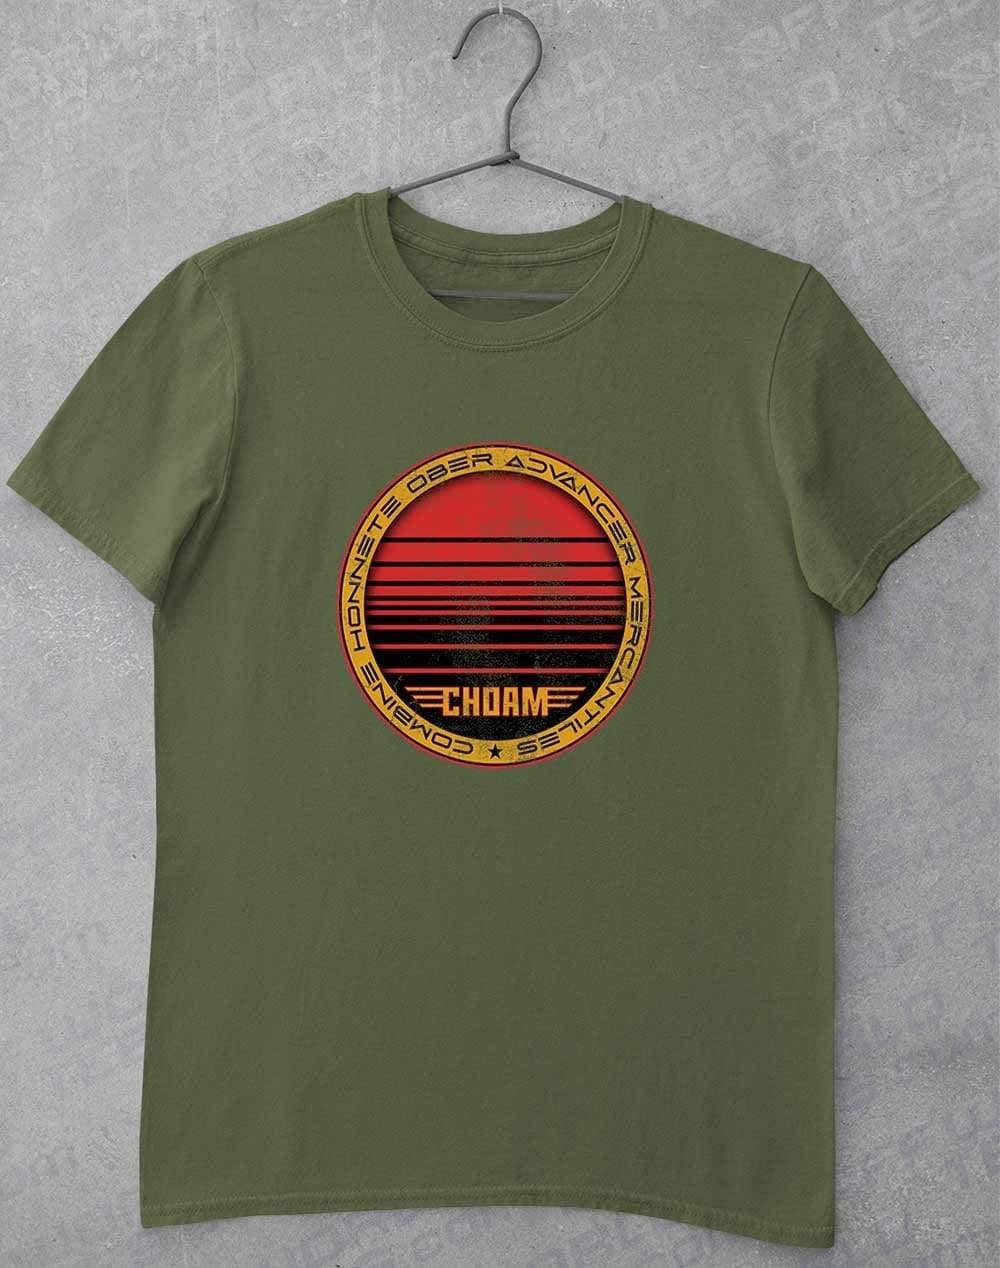 CHOAM T-Shirt S / Military Green  - Off World Tees